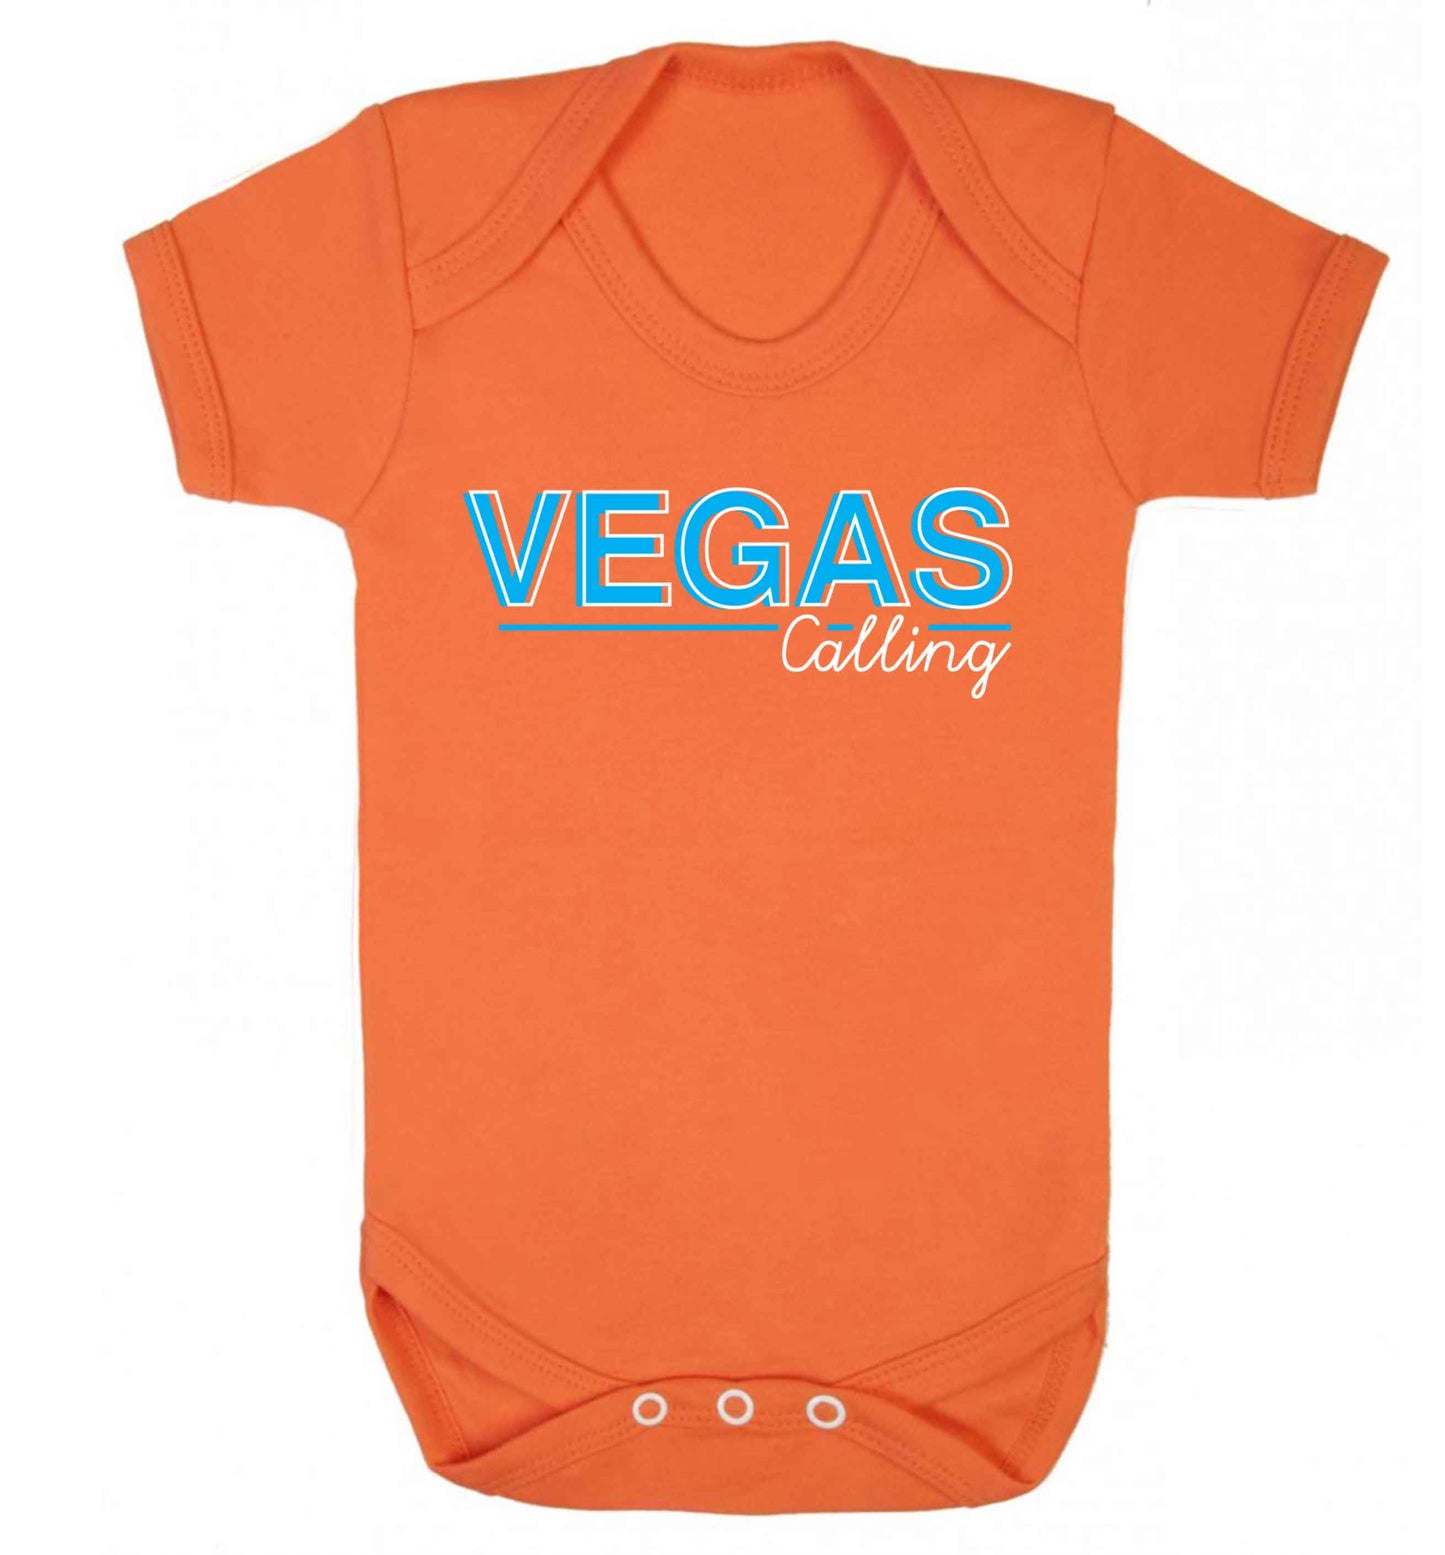 Vegas calling Baby Vest orange 18-24 months